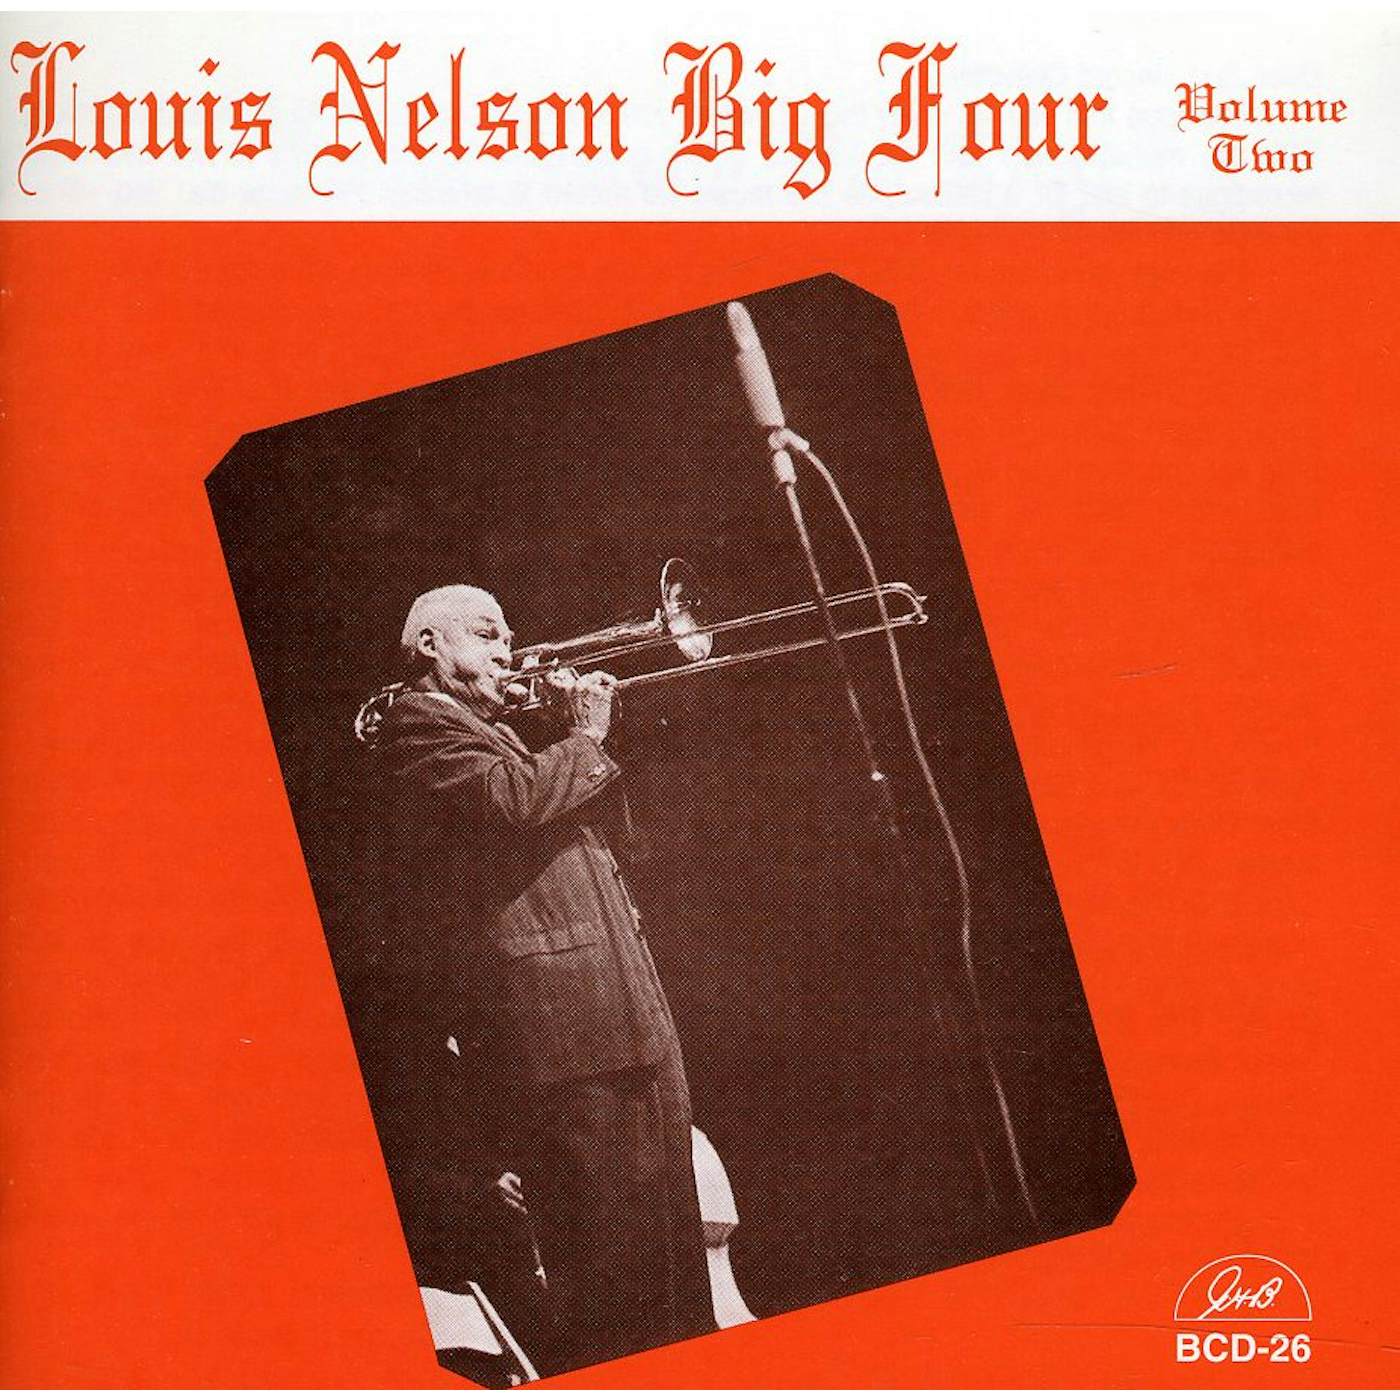 Louis Nelson BIG FOUR 2 CD